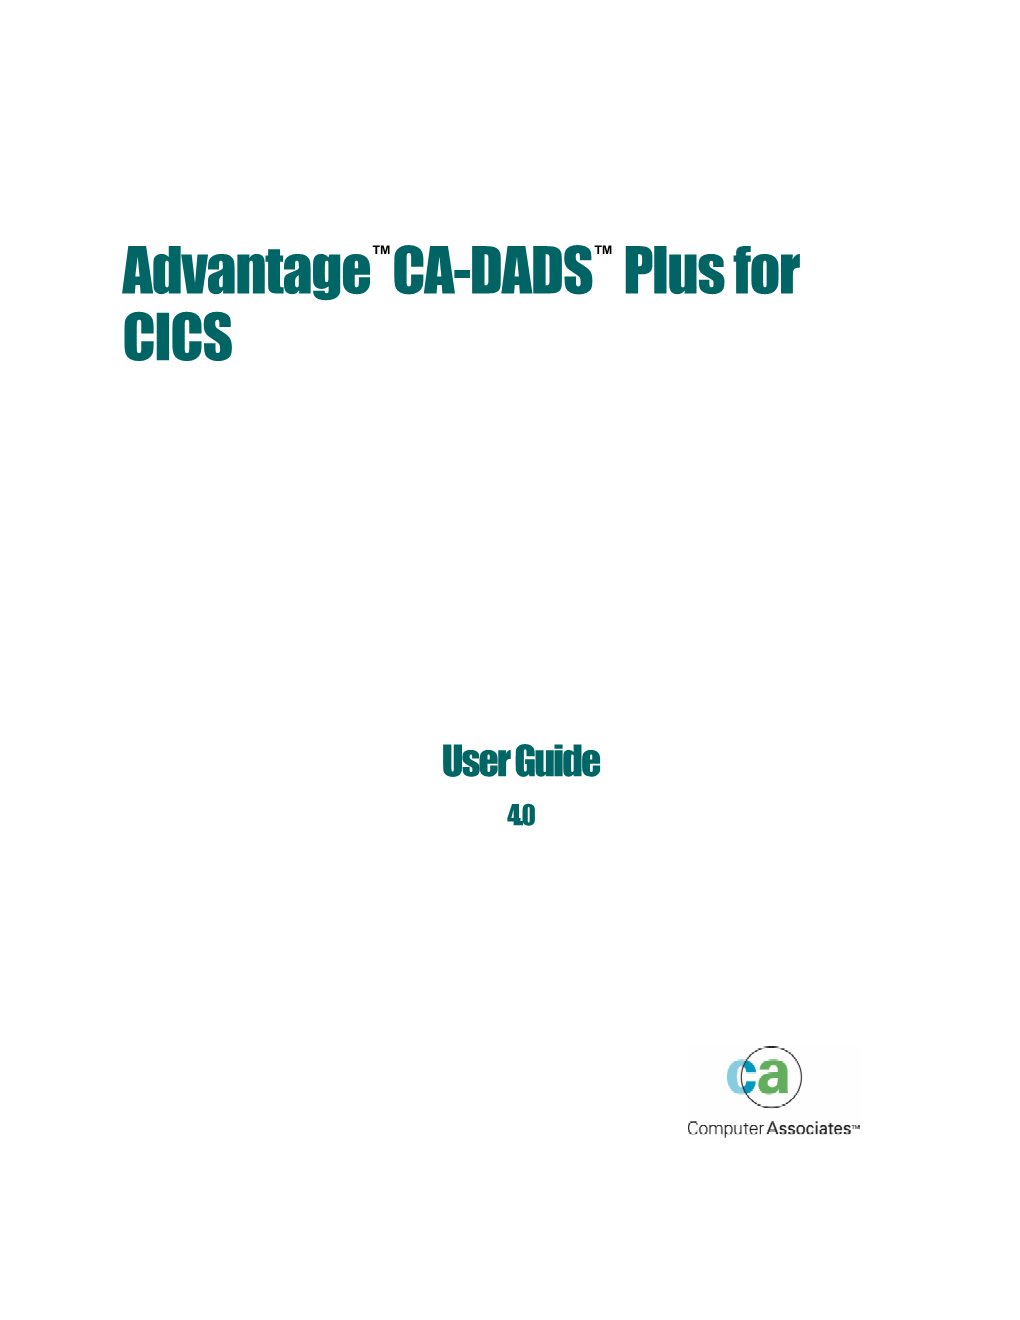 Advantage CA-DADS Plus for CICS 4.0 User Guide